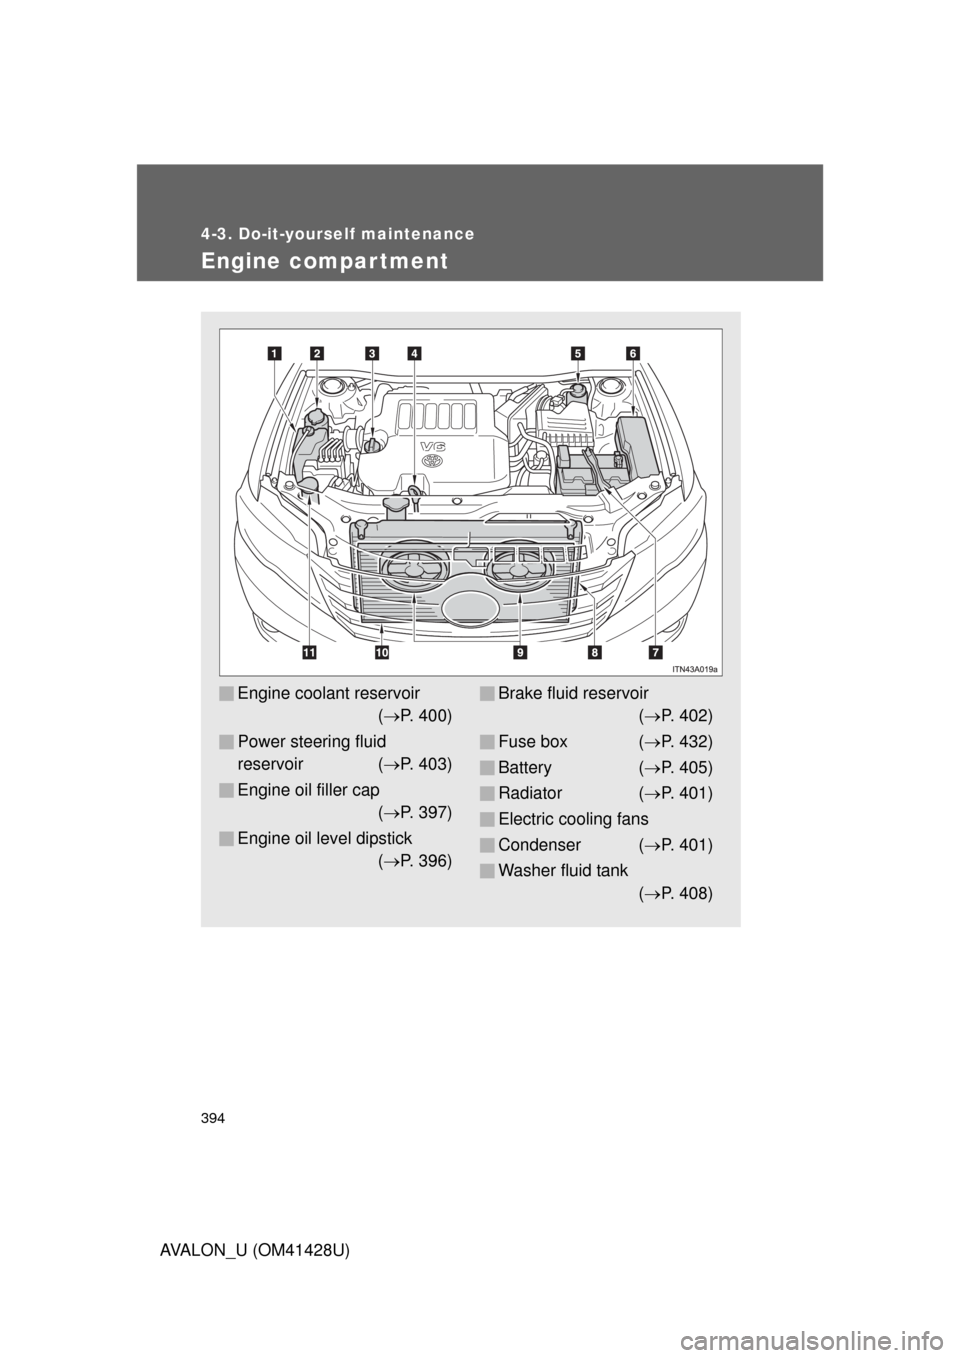 TOYOTA AVALON 2011 XX30 / 3.G Owners Manual 394
4-3. Do-it-yourself maintenance
AVALON_U (OM41428U)
Engine compar tment
Engine coolant reservoir
(P. 400)
Power steering fluid 
reservoir (P. 403)
Engine oil filler cap
(P. 397)
Engine oi